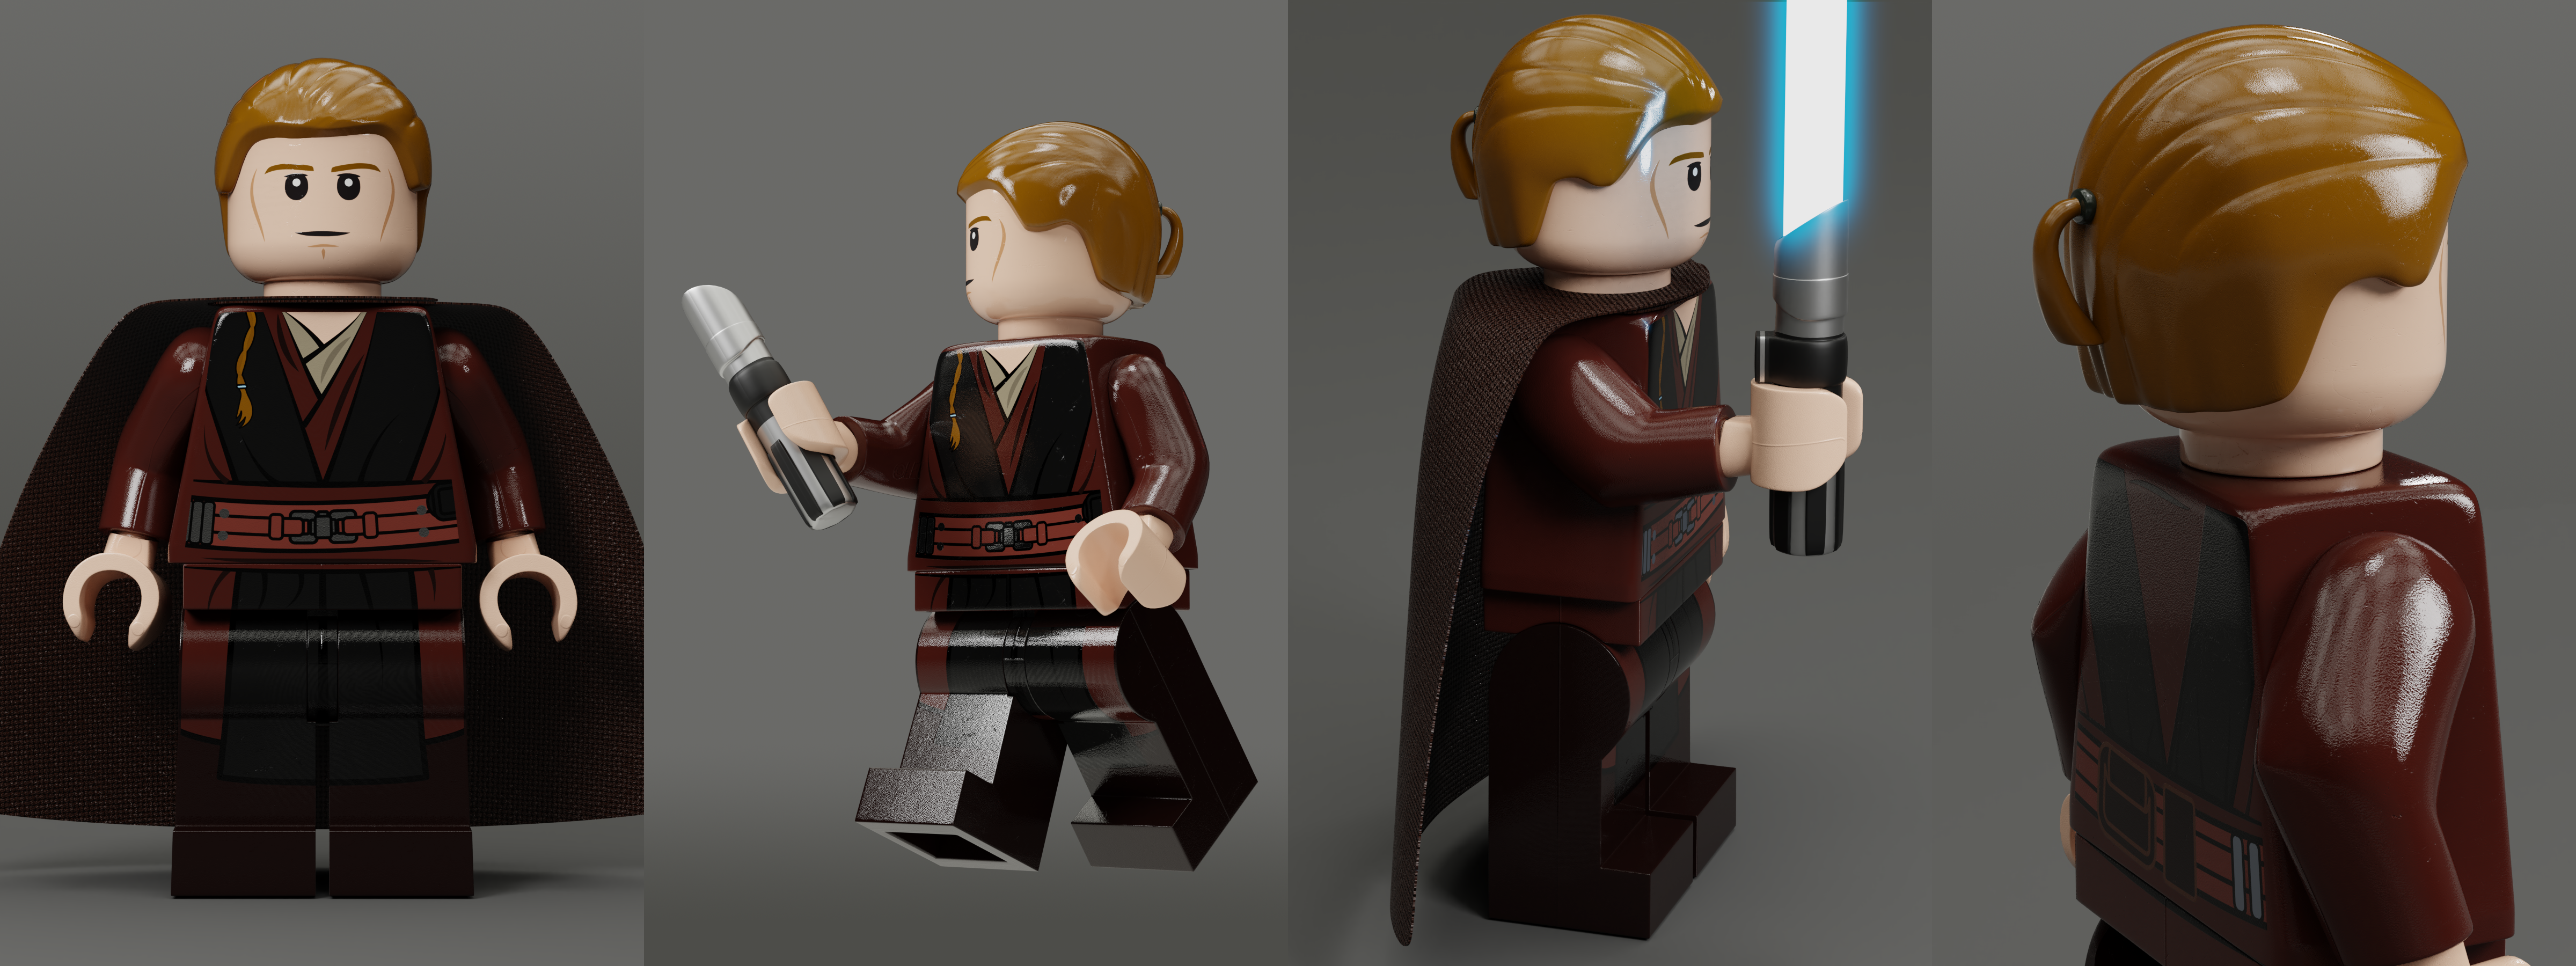 LEGO Star Wars Padawan Anakin Skywalker by Erik Petnehazi